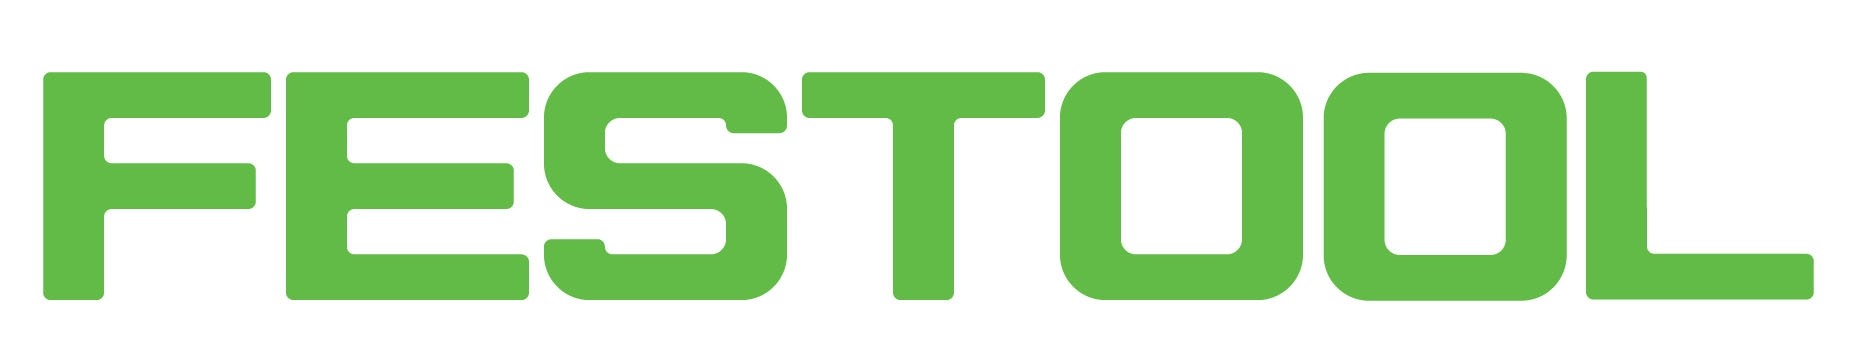 logo Festool